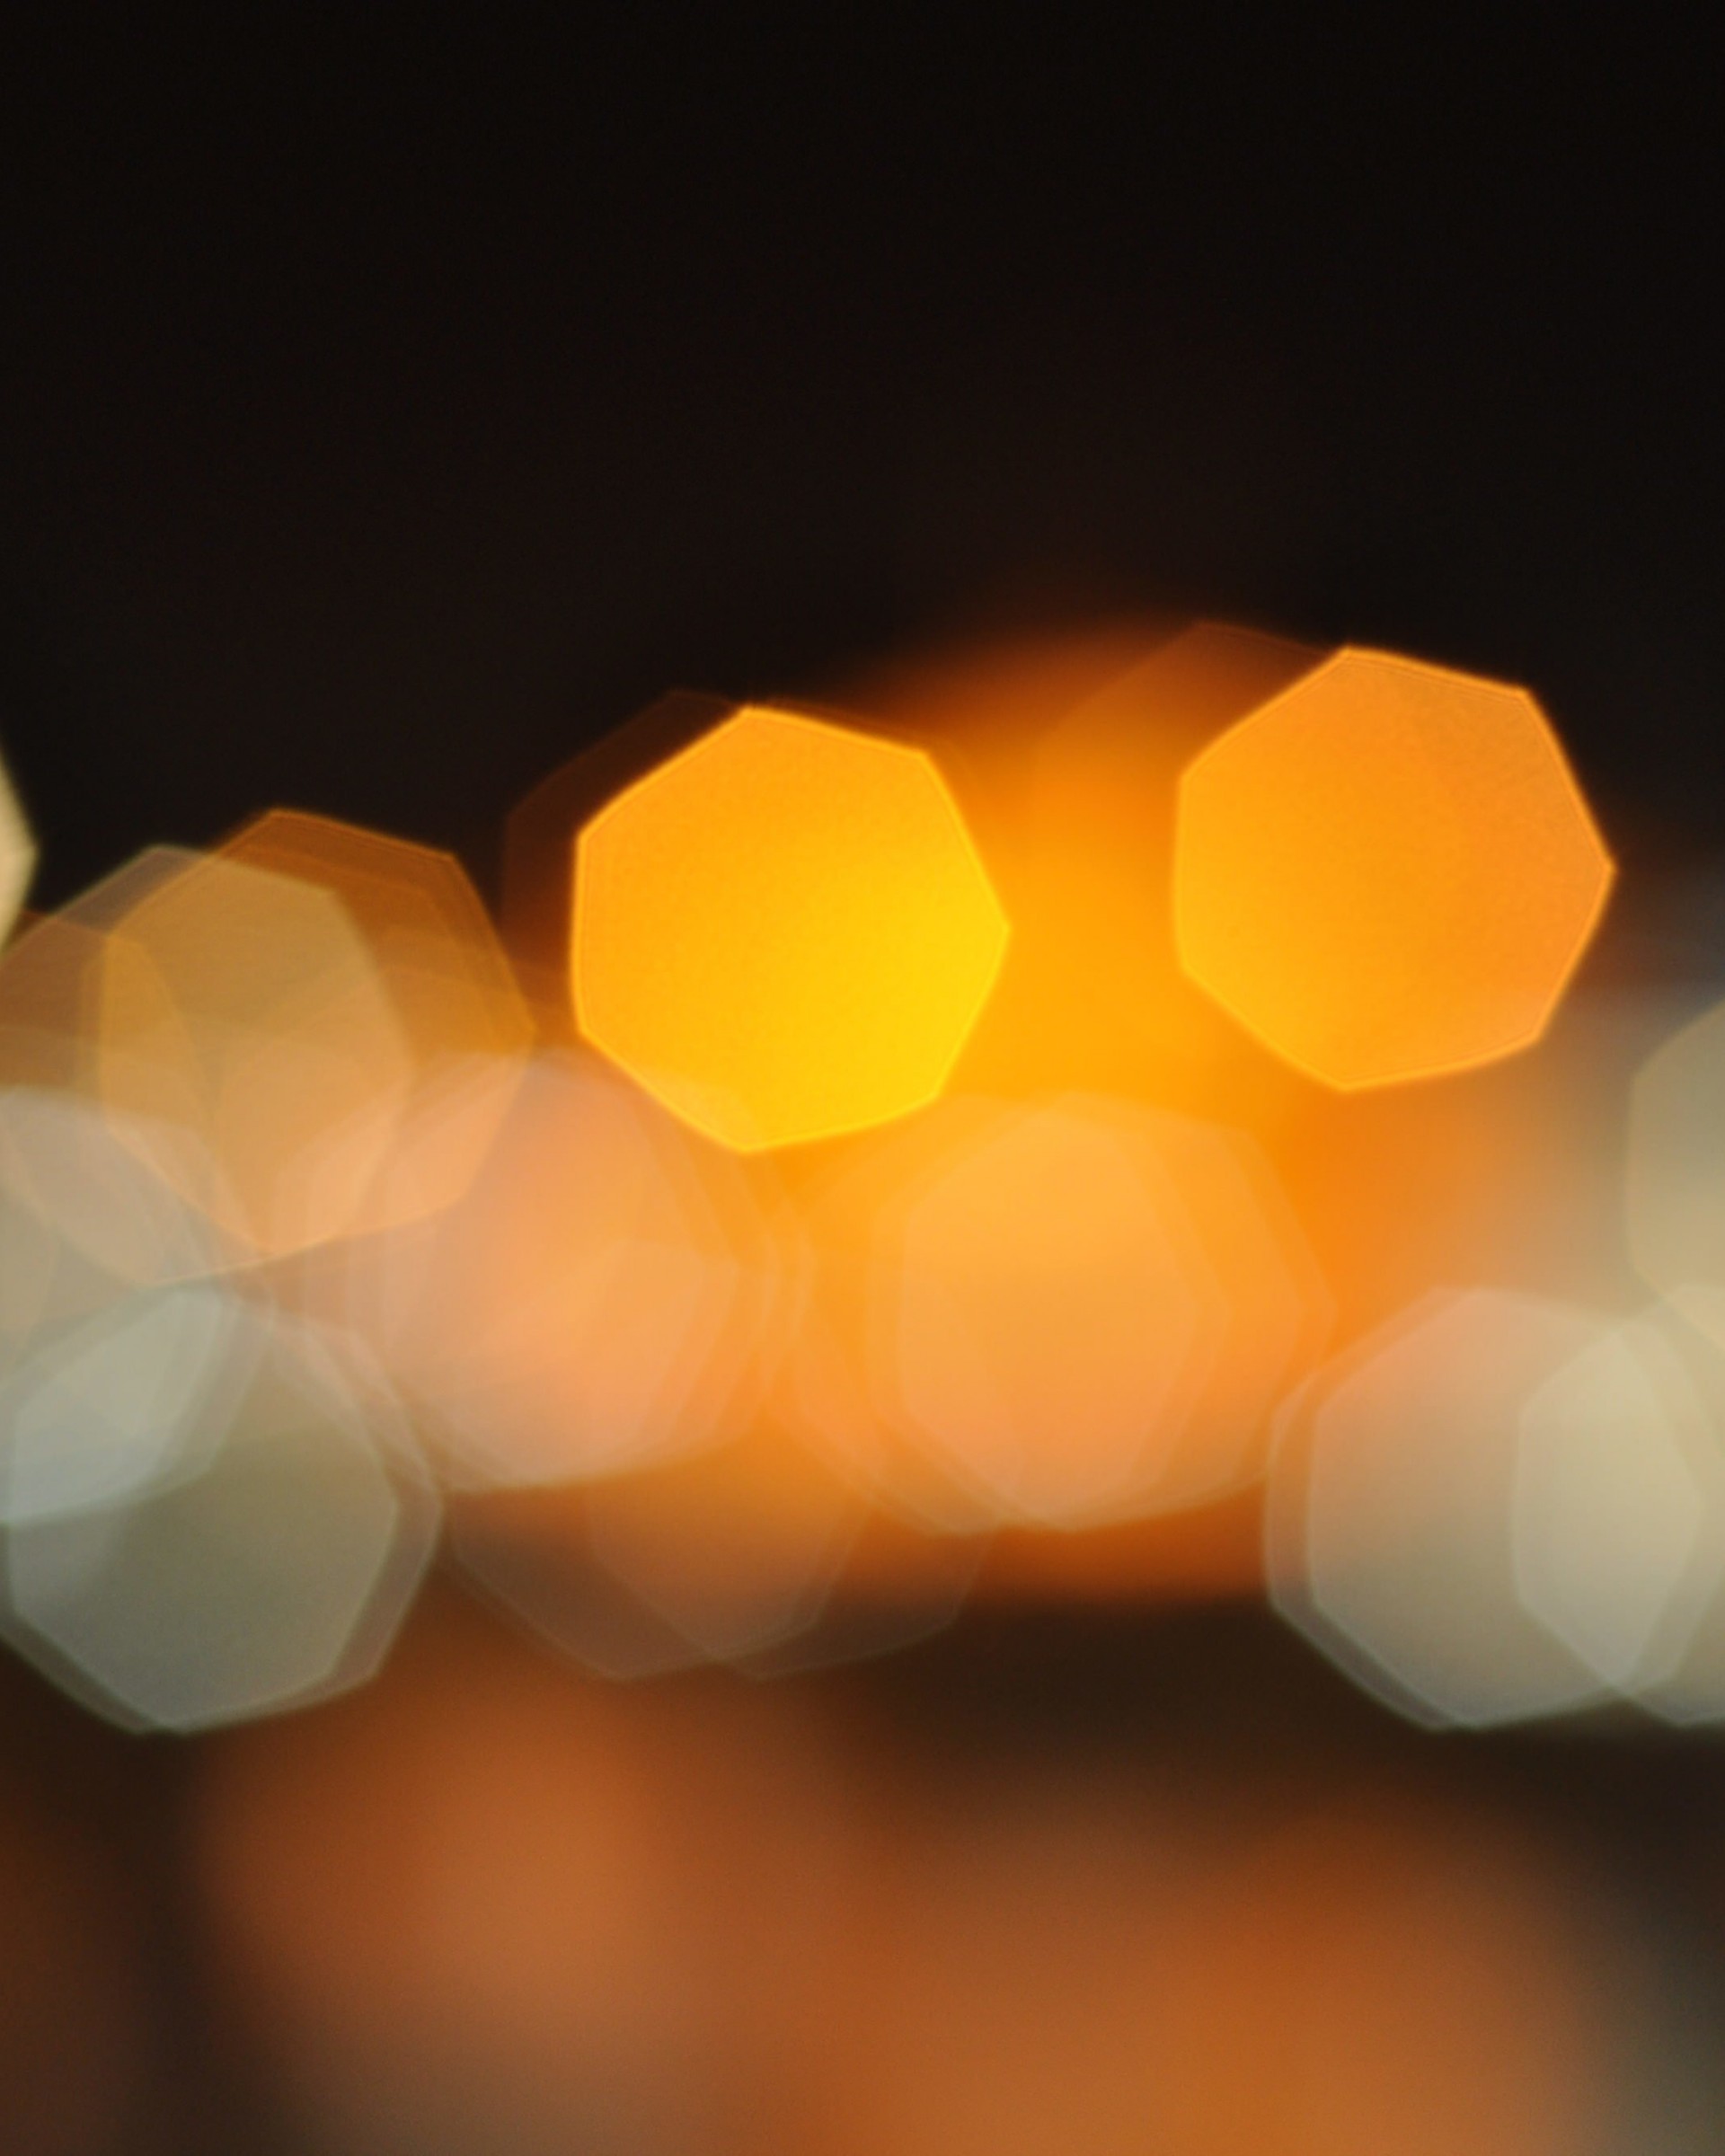 Blurred City Lights Wallpaper for Google Nexus 7